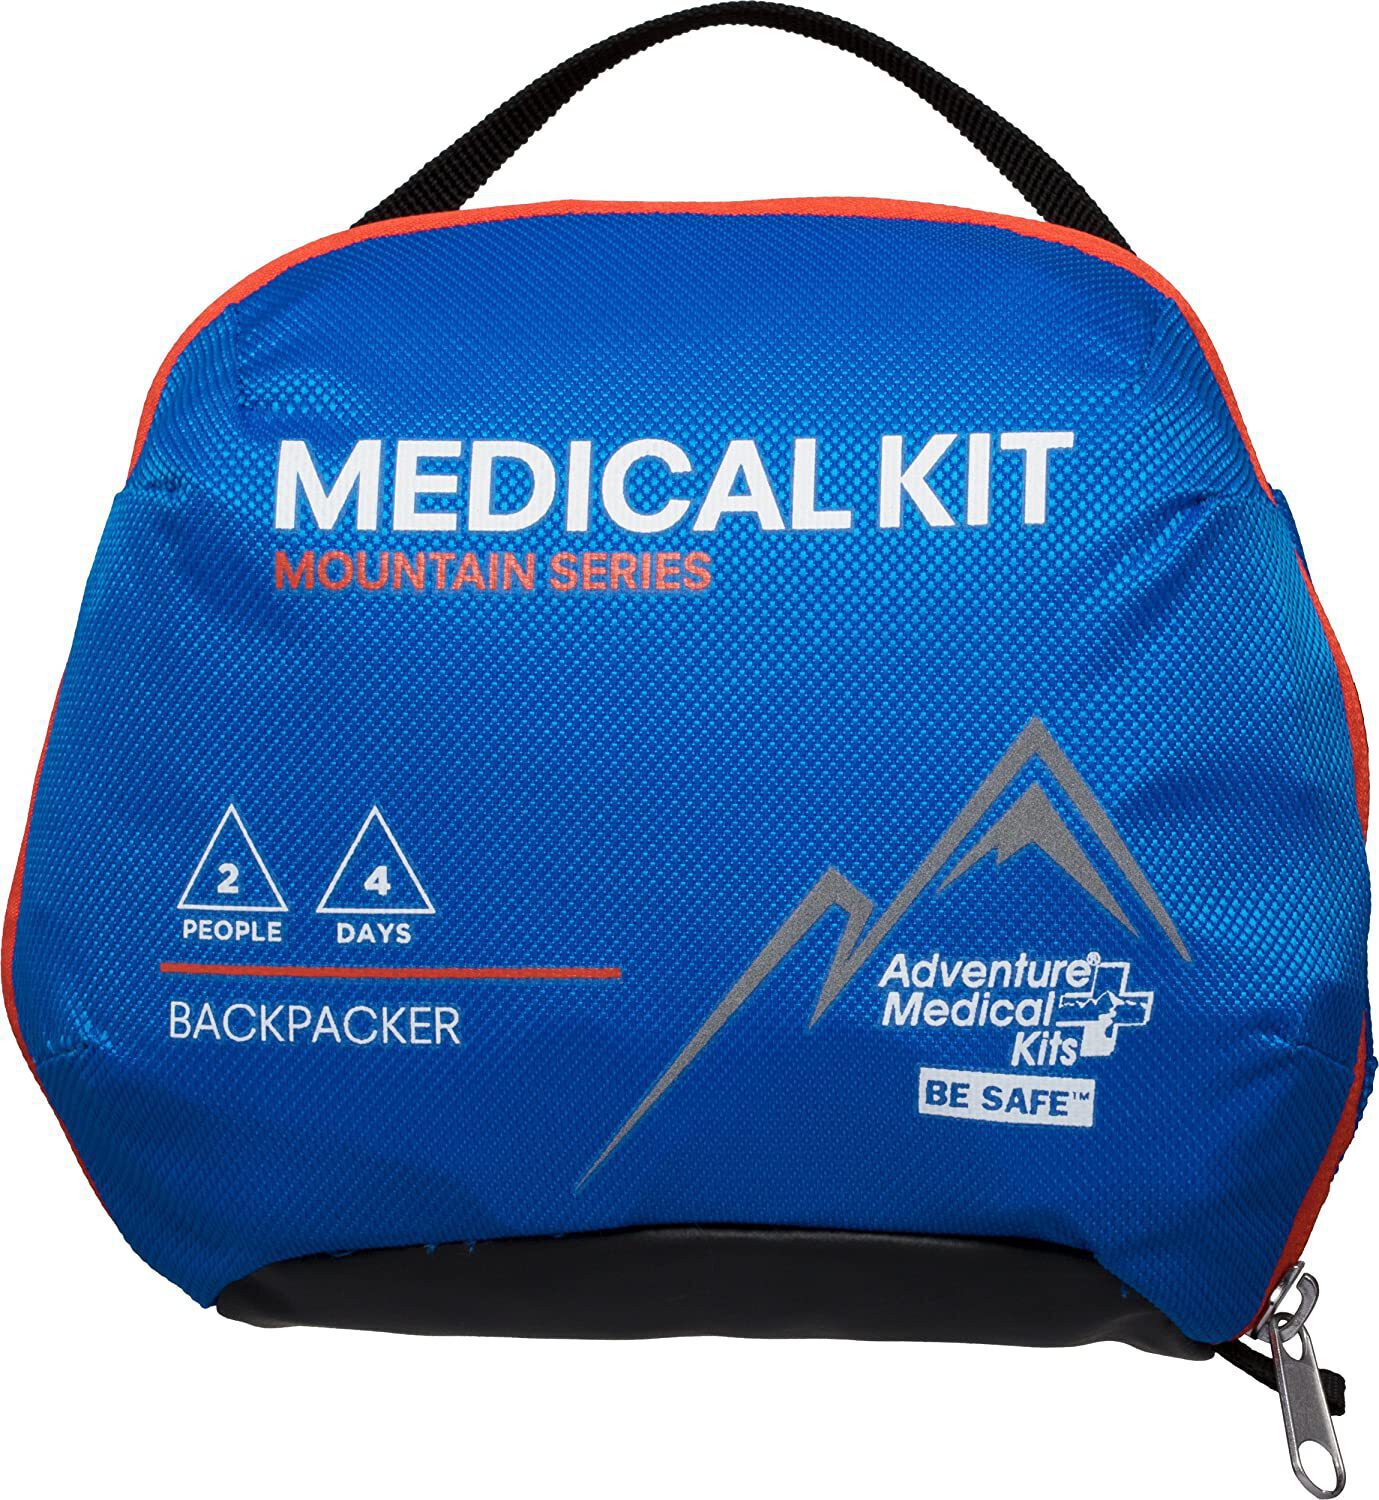 Adventure Mountain Series Medical Kits